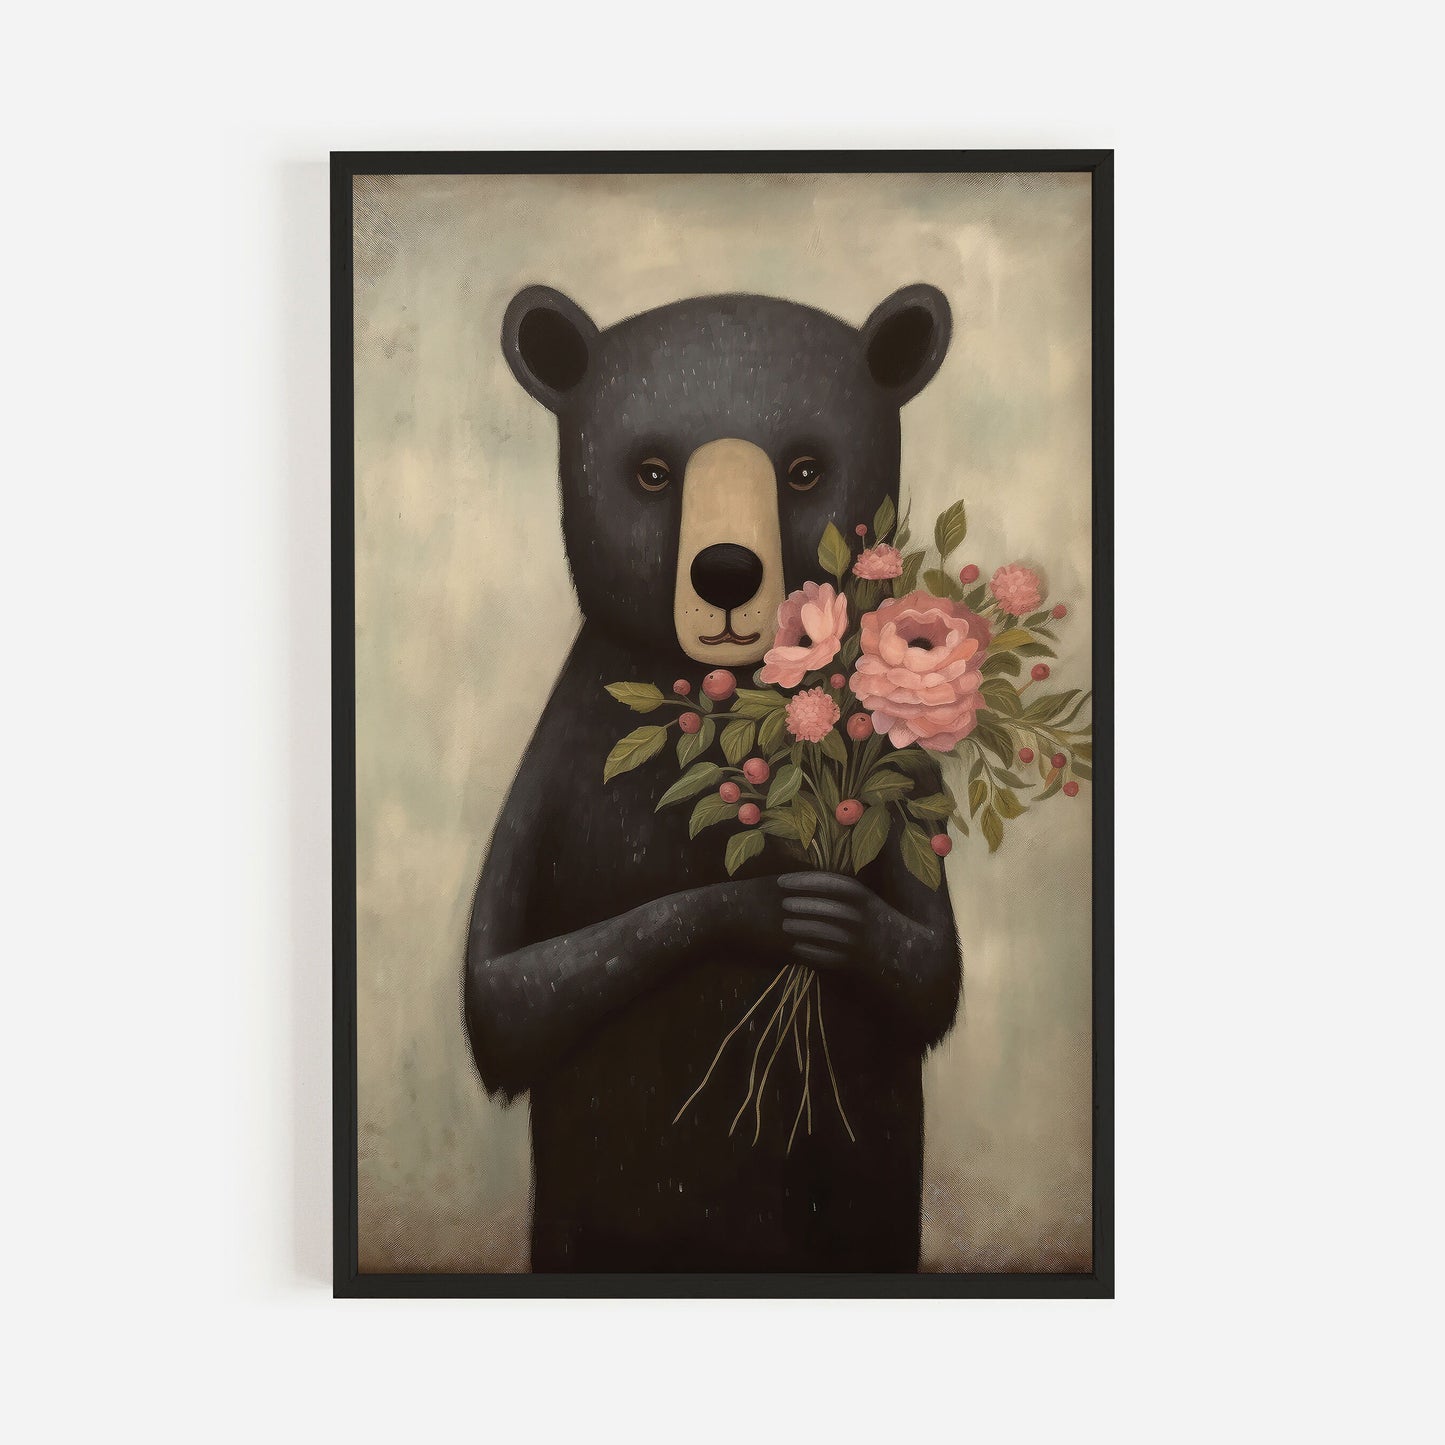 Vintage Black Bear Nursery Wall Art - Animal with Flowers Wall Art, Unique Nursery Decor, Digital Printable Art for Your Kids Room